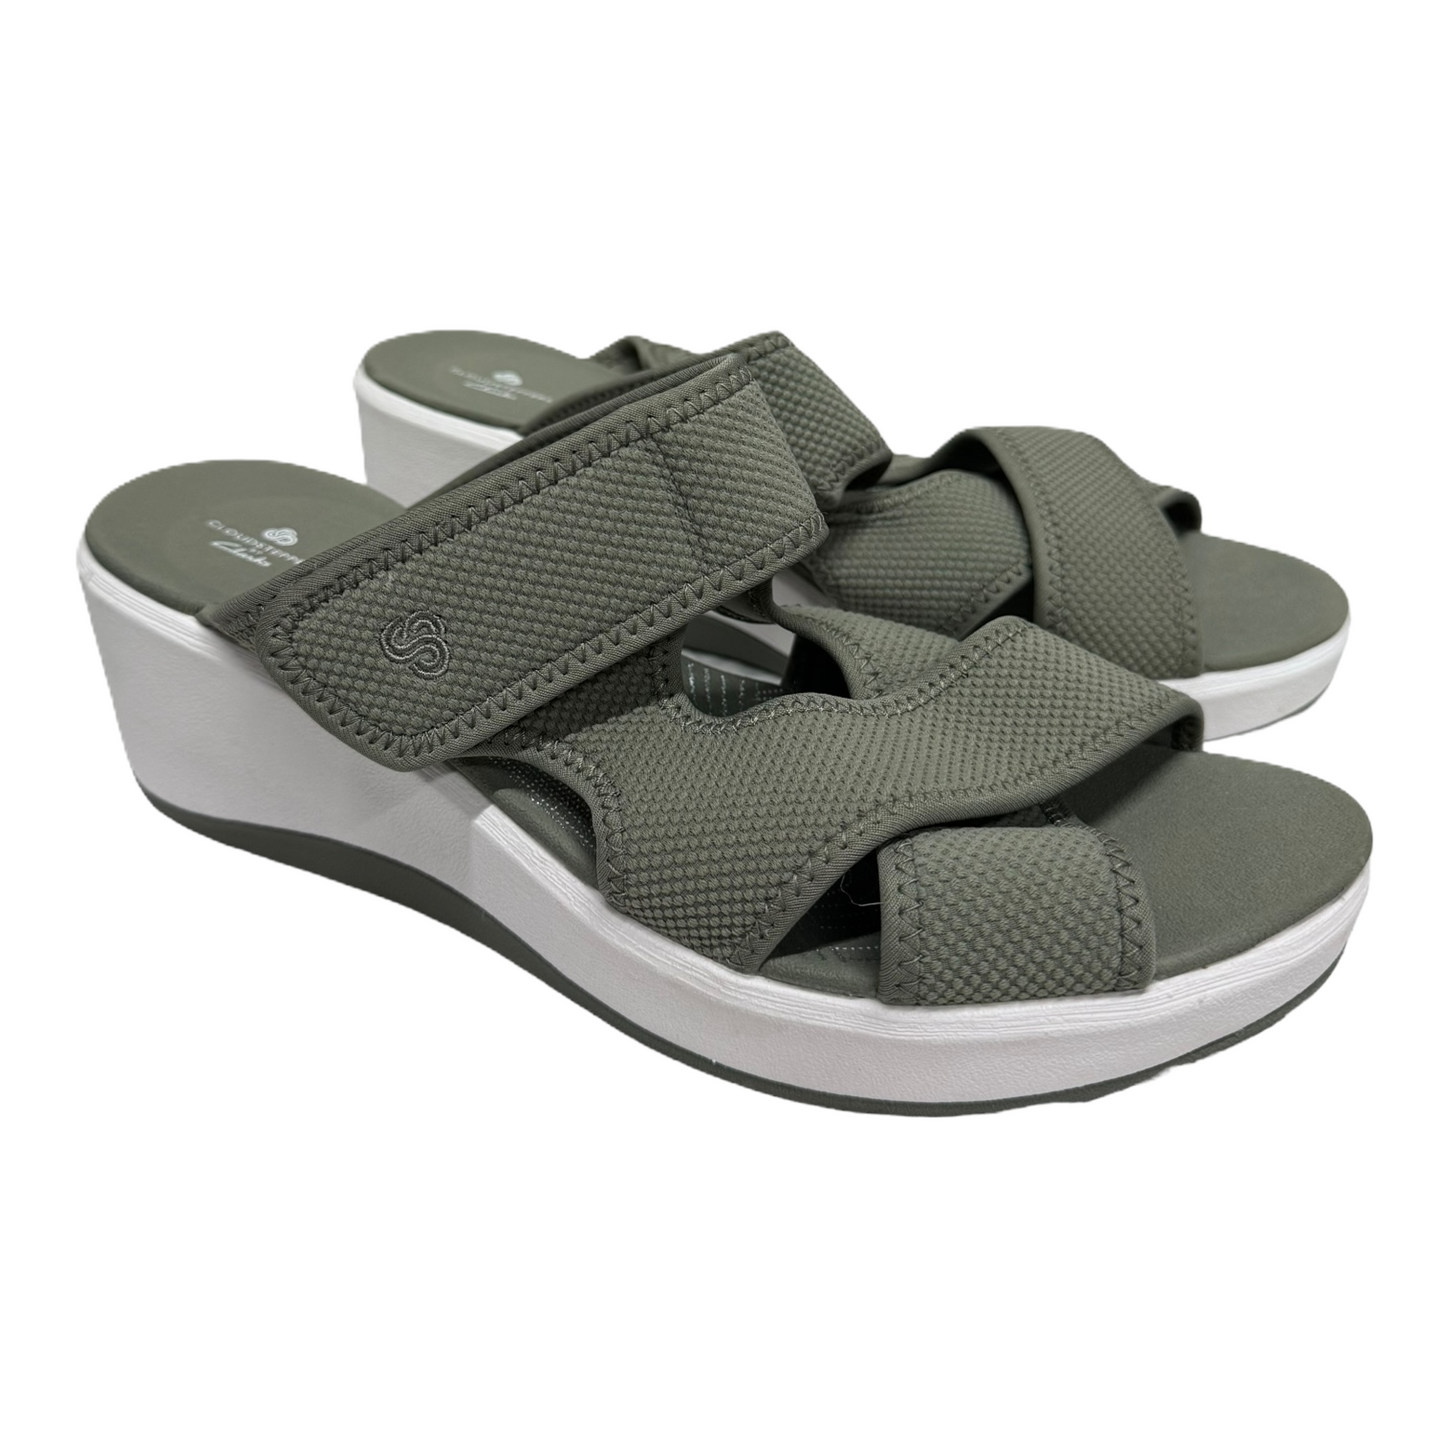 Sandals Heels Platform By Clarks  Size: 9.5